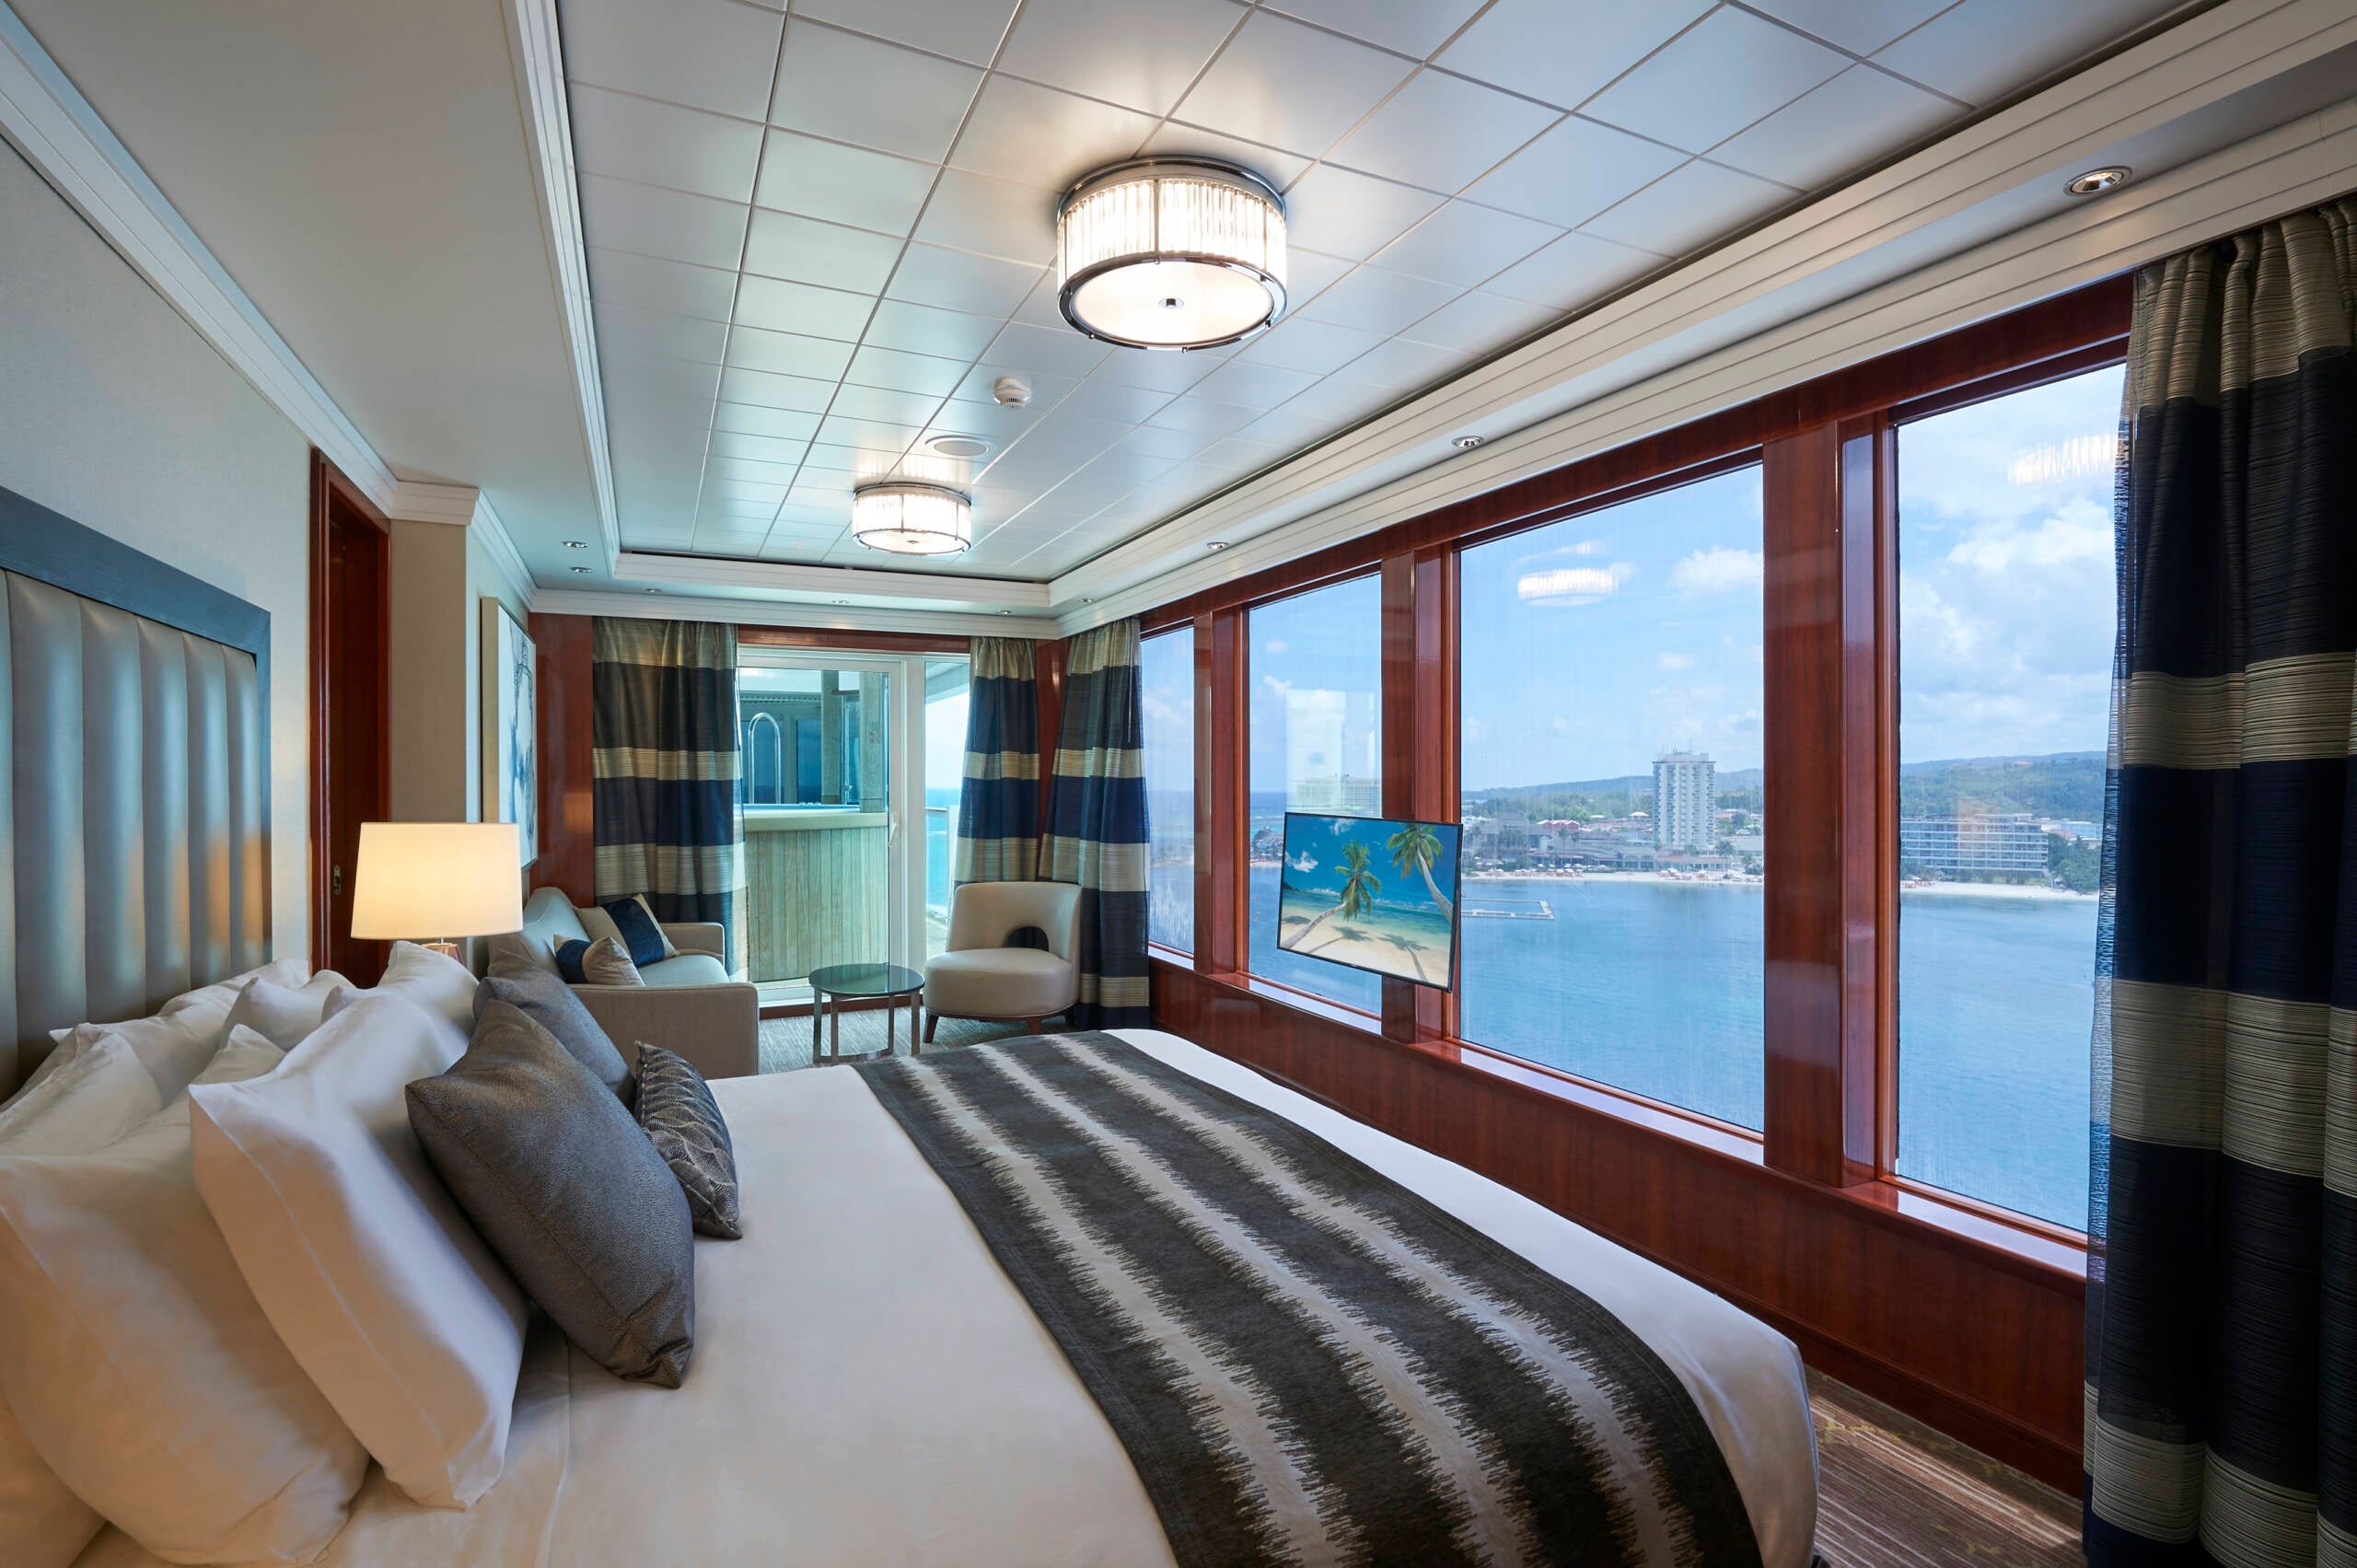 Norwegian Dawn Cruise Ship Suites